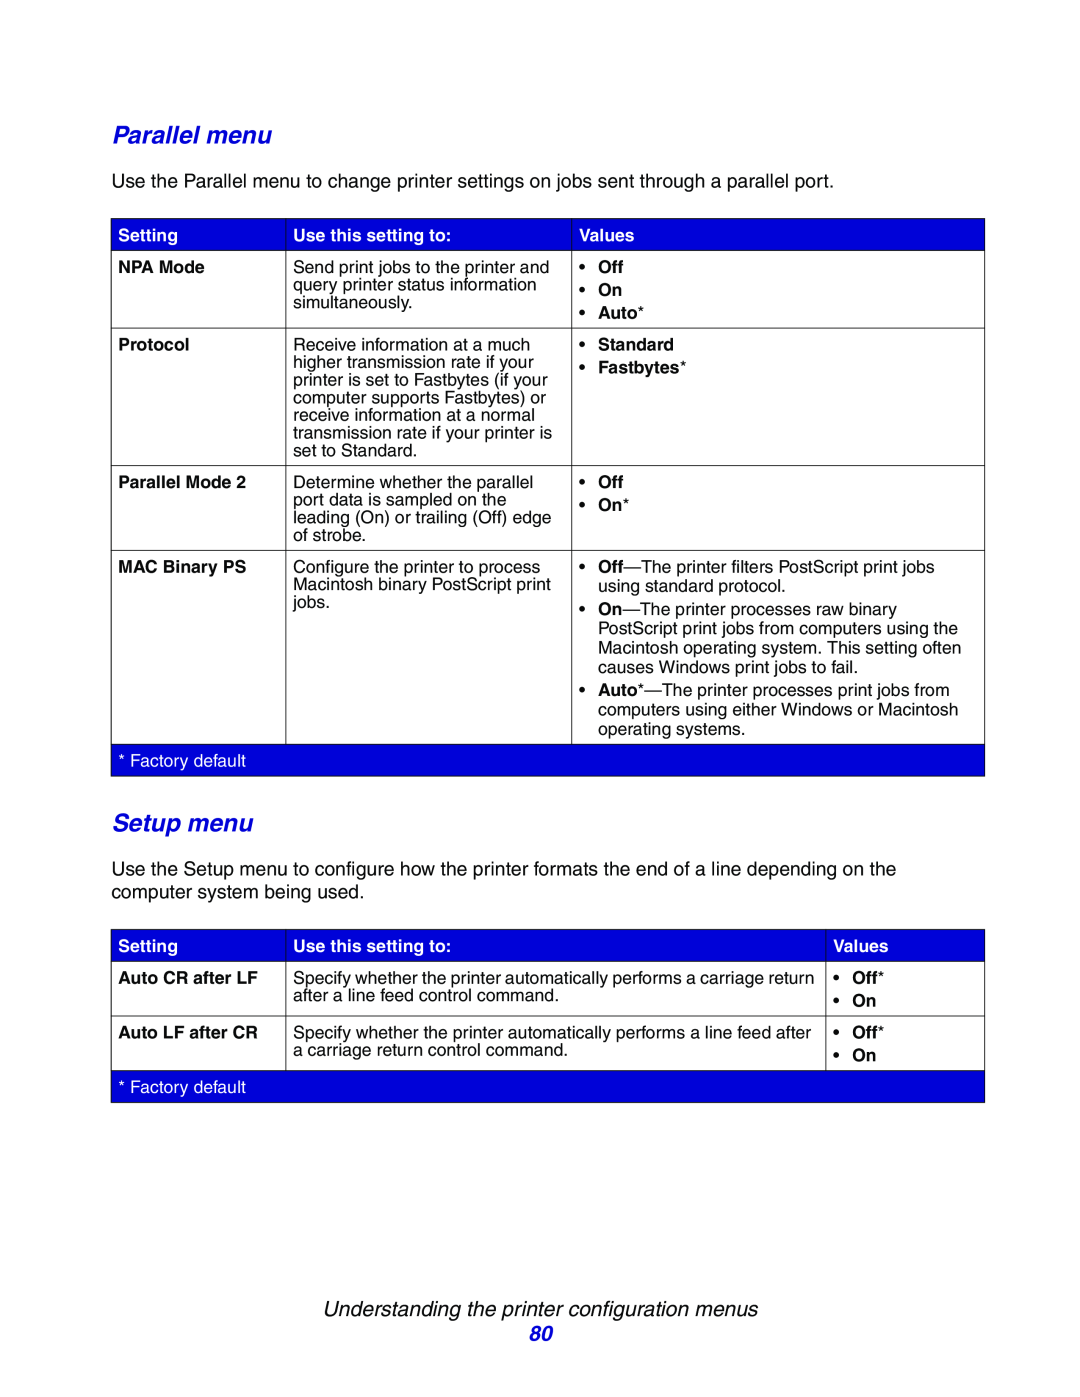 Lexmark E234N manual Parallel menu, Setup menu, Understanding the printer configuration menus 